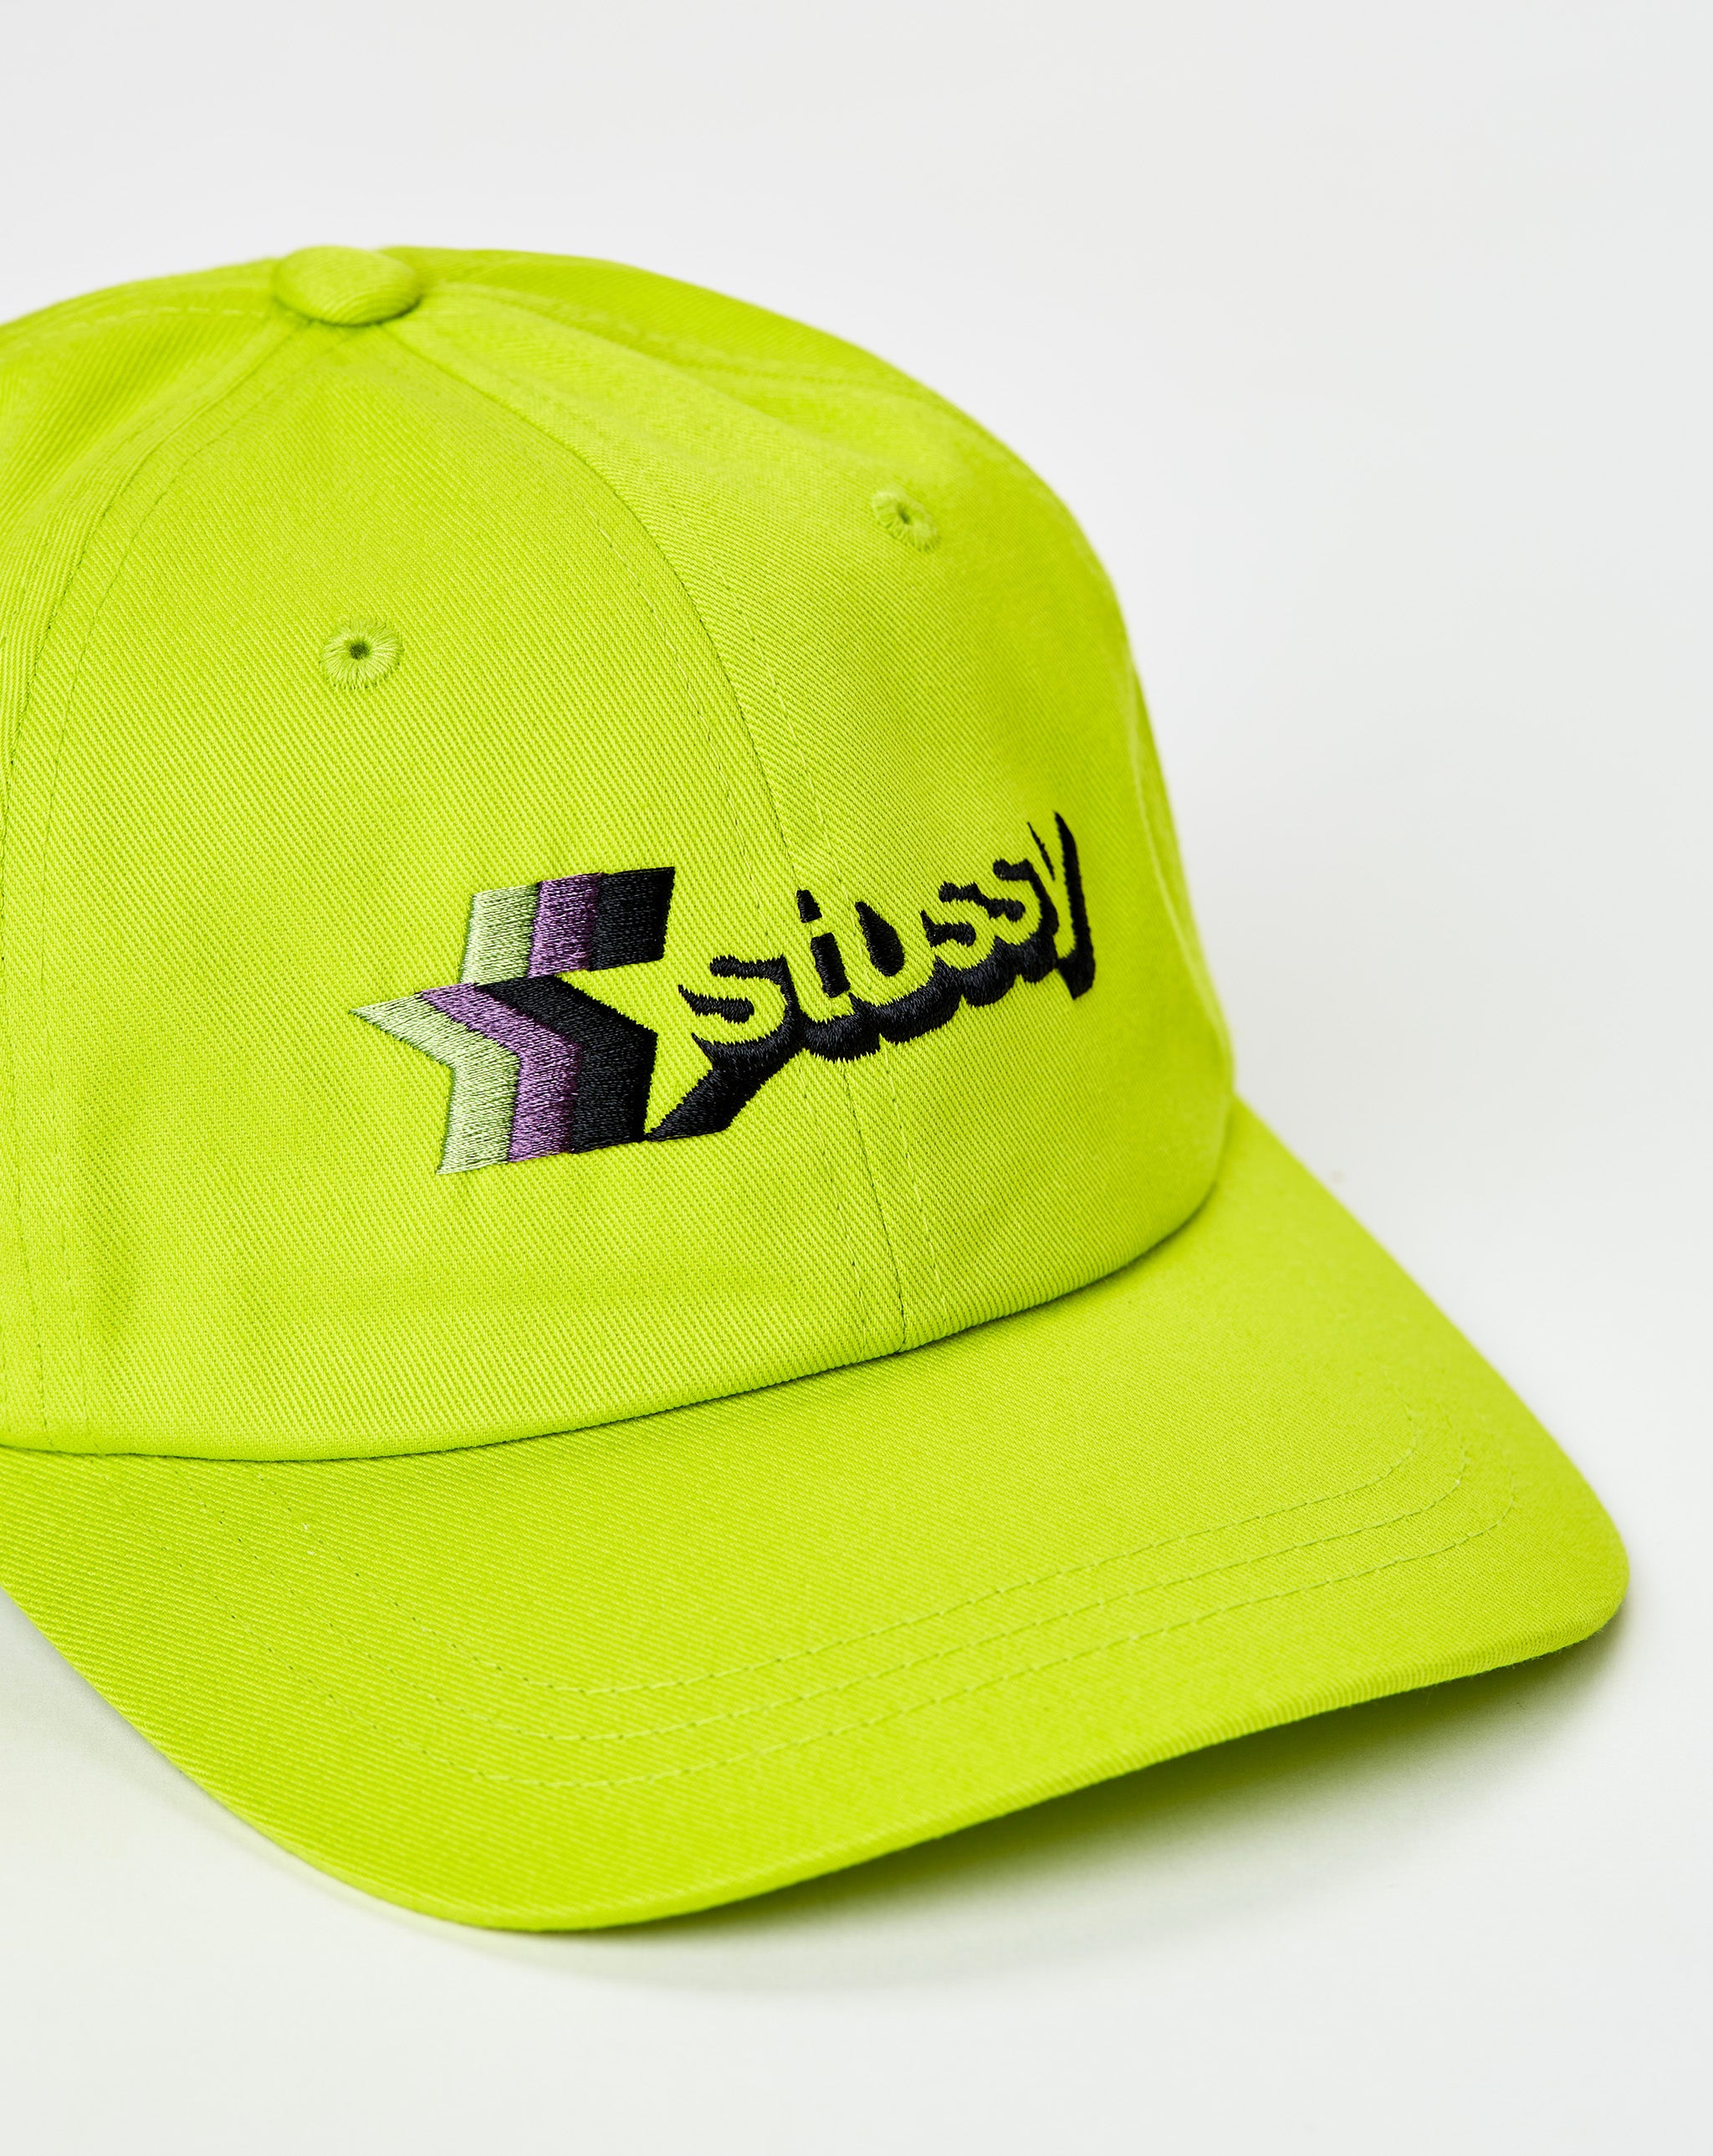 Stüssy 3 Star Low Pro Strapback Cap  - XHIBITION